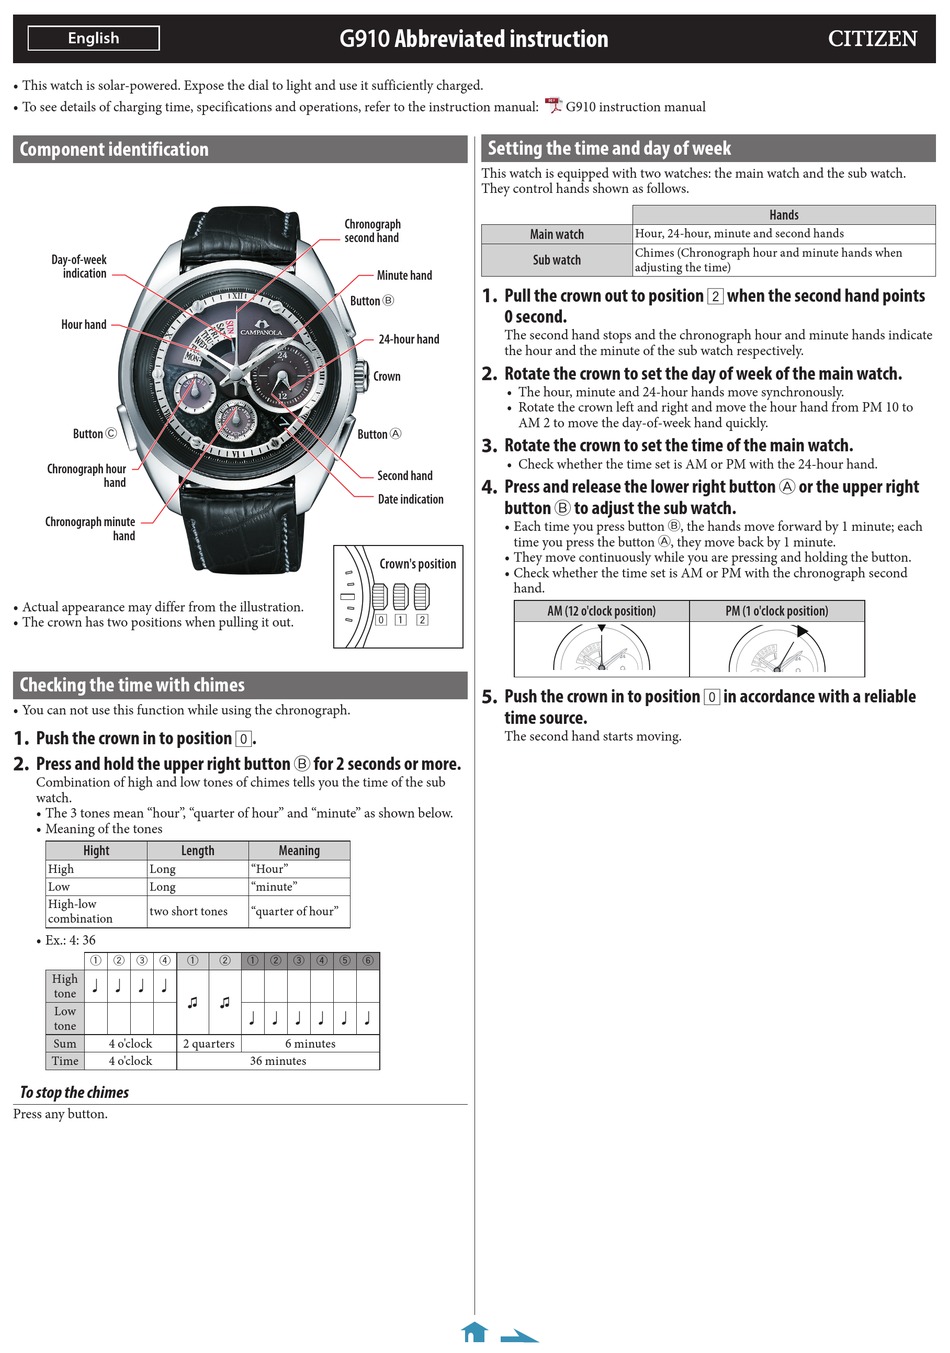 Citizen G910 Abbreviated Instruction Pdf Download Manualslib